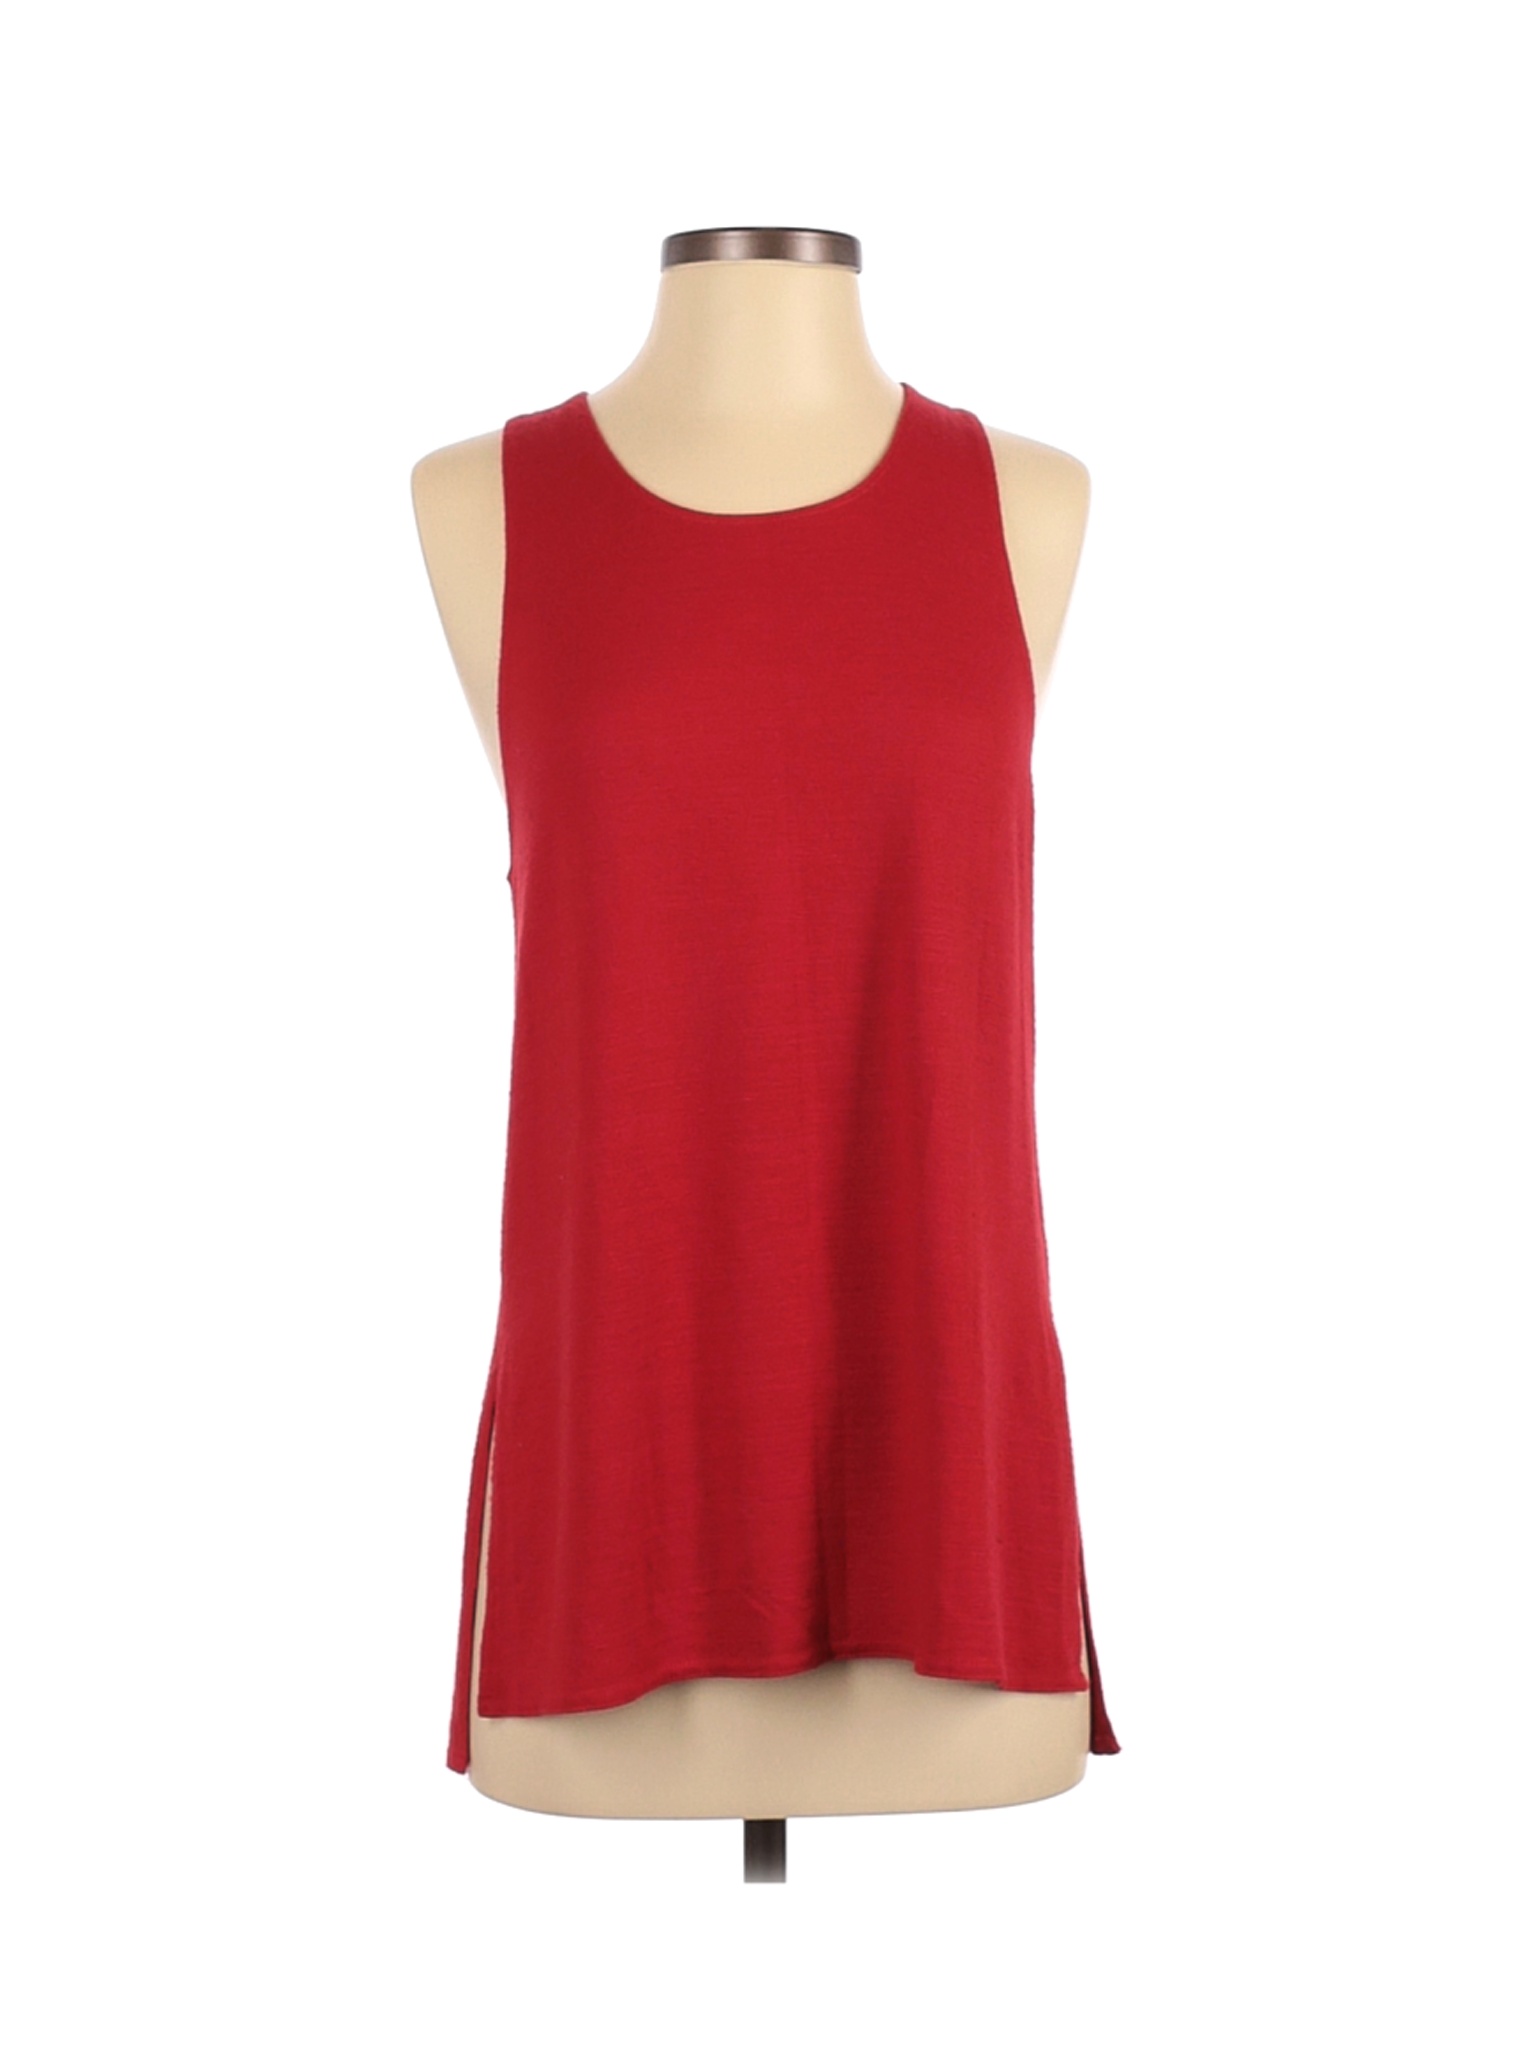 Wilfred Free Women Red Sleeveless Top S | eBay